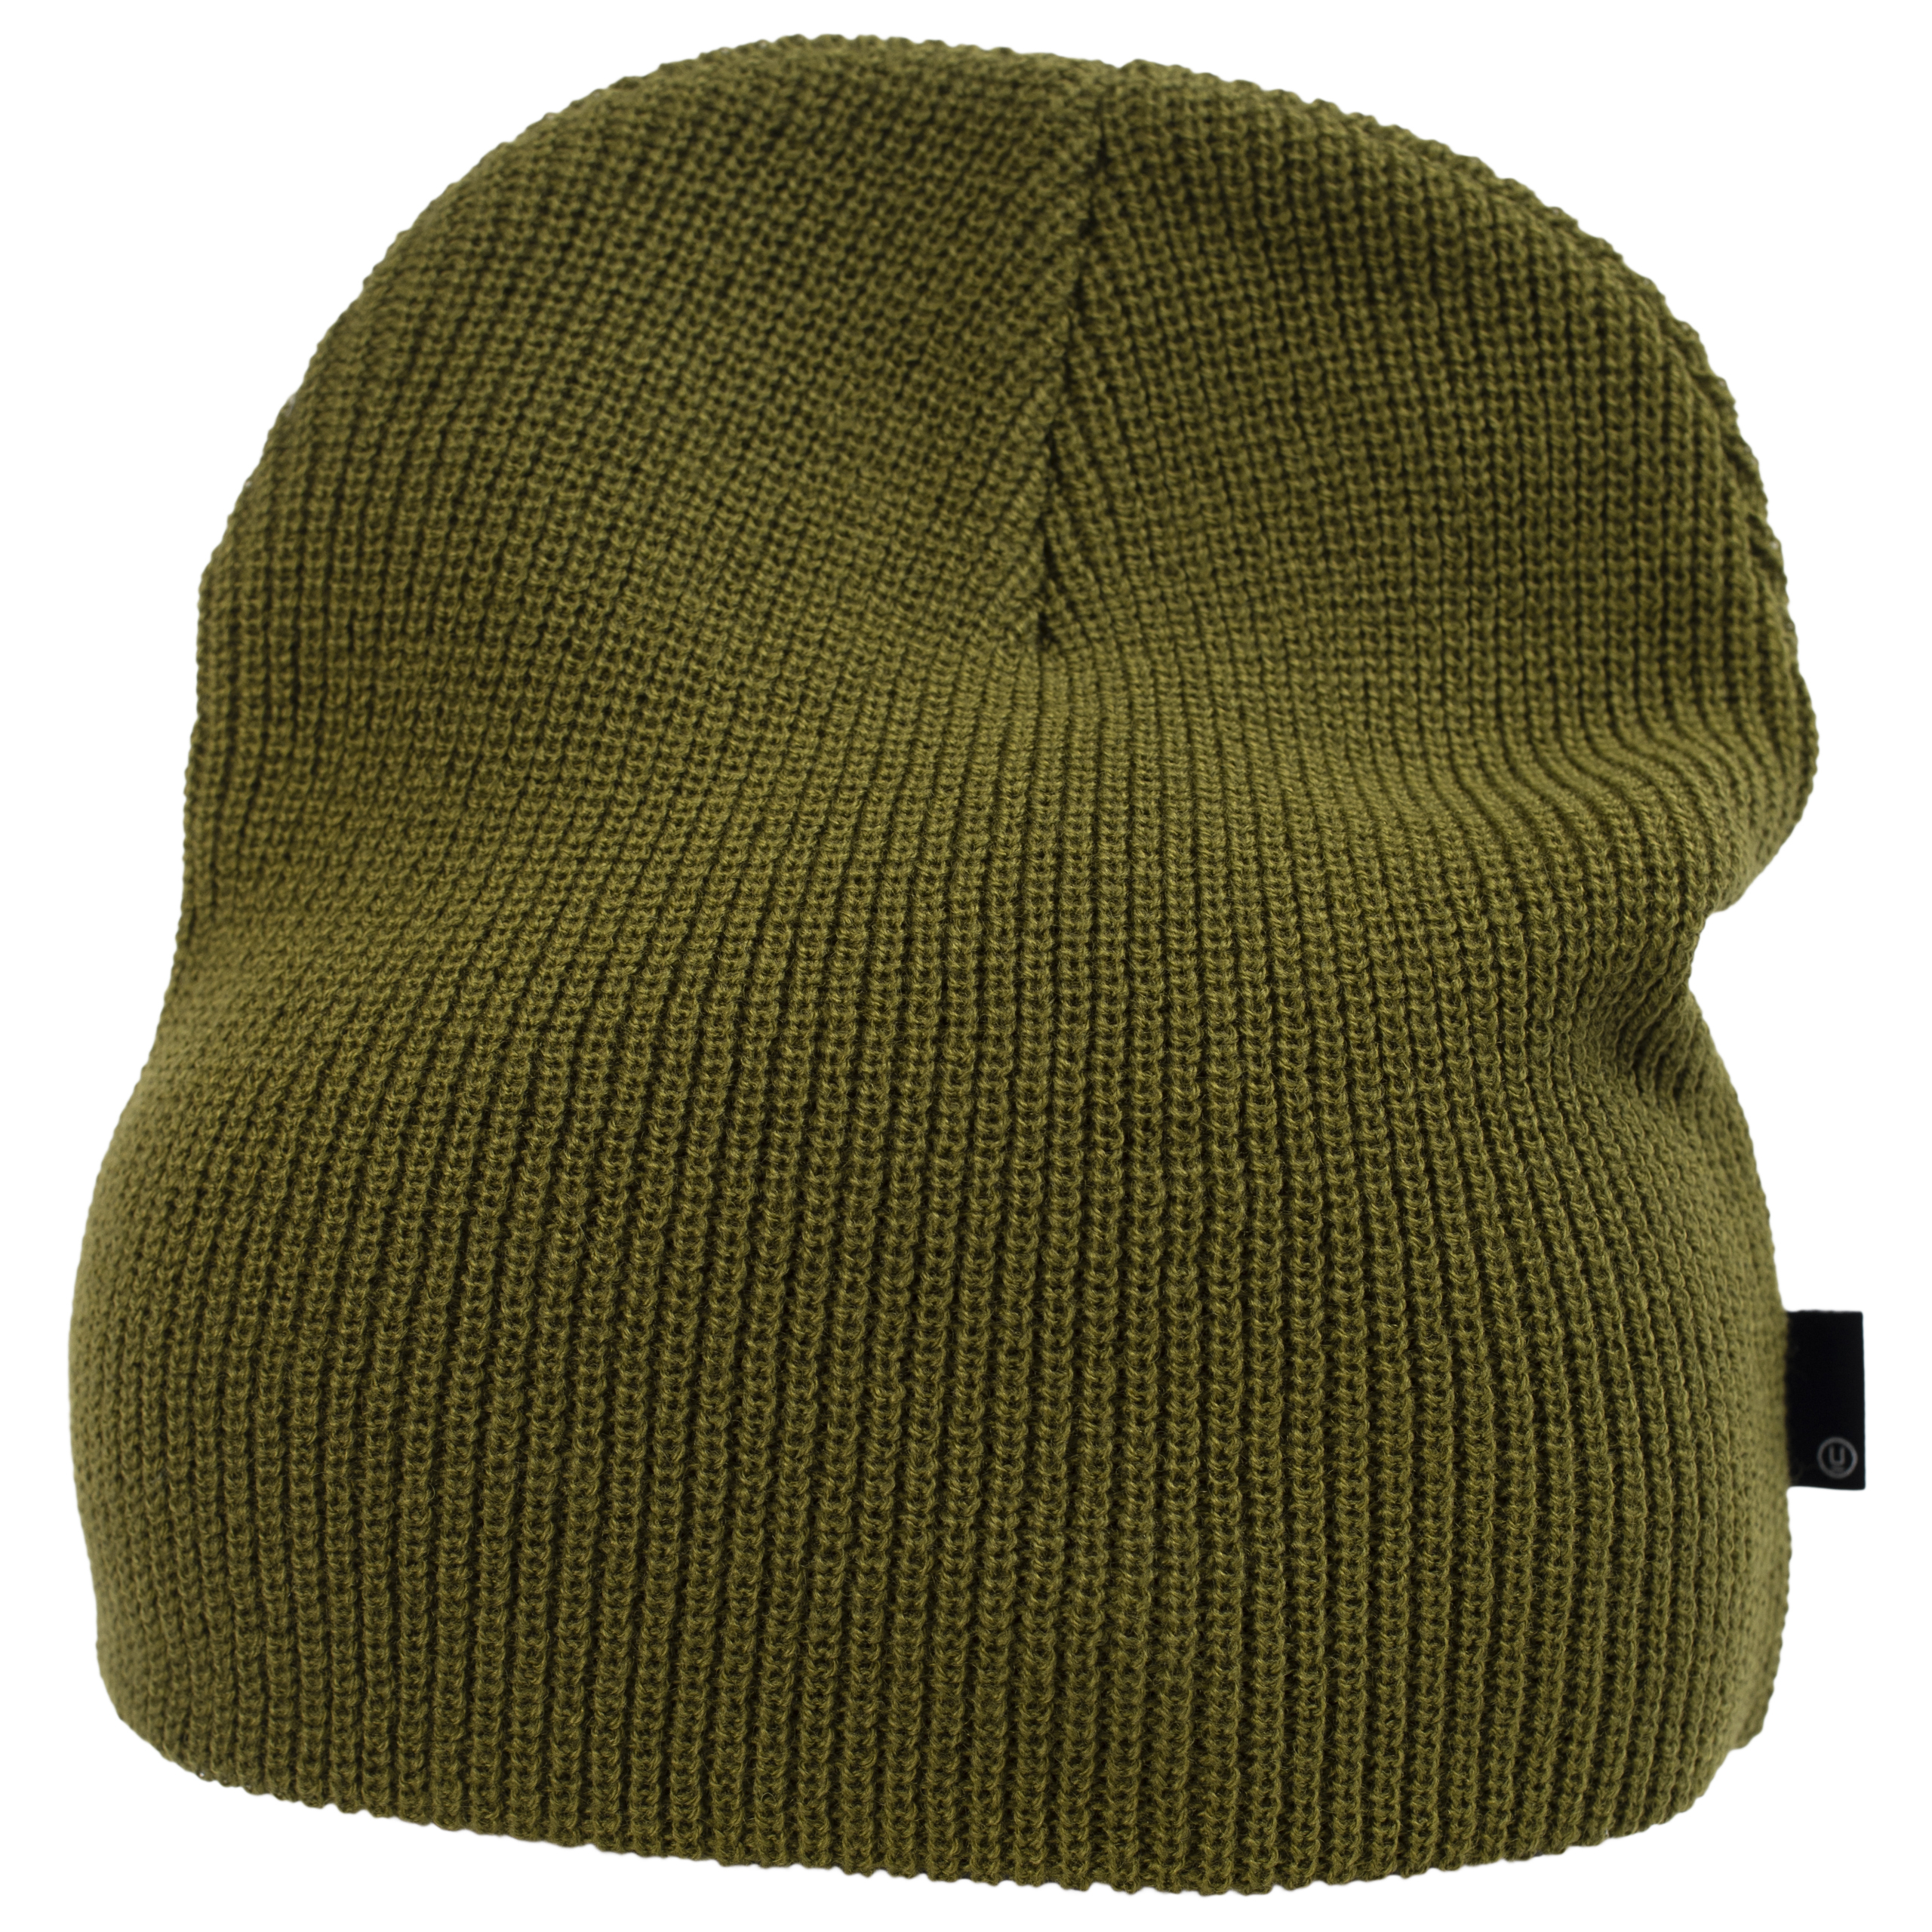 Вязаная шапка цвета хаки Undercover UC2A4H03/khaki, размер One Size